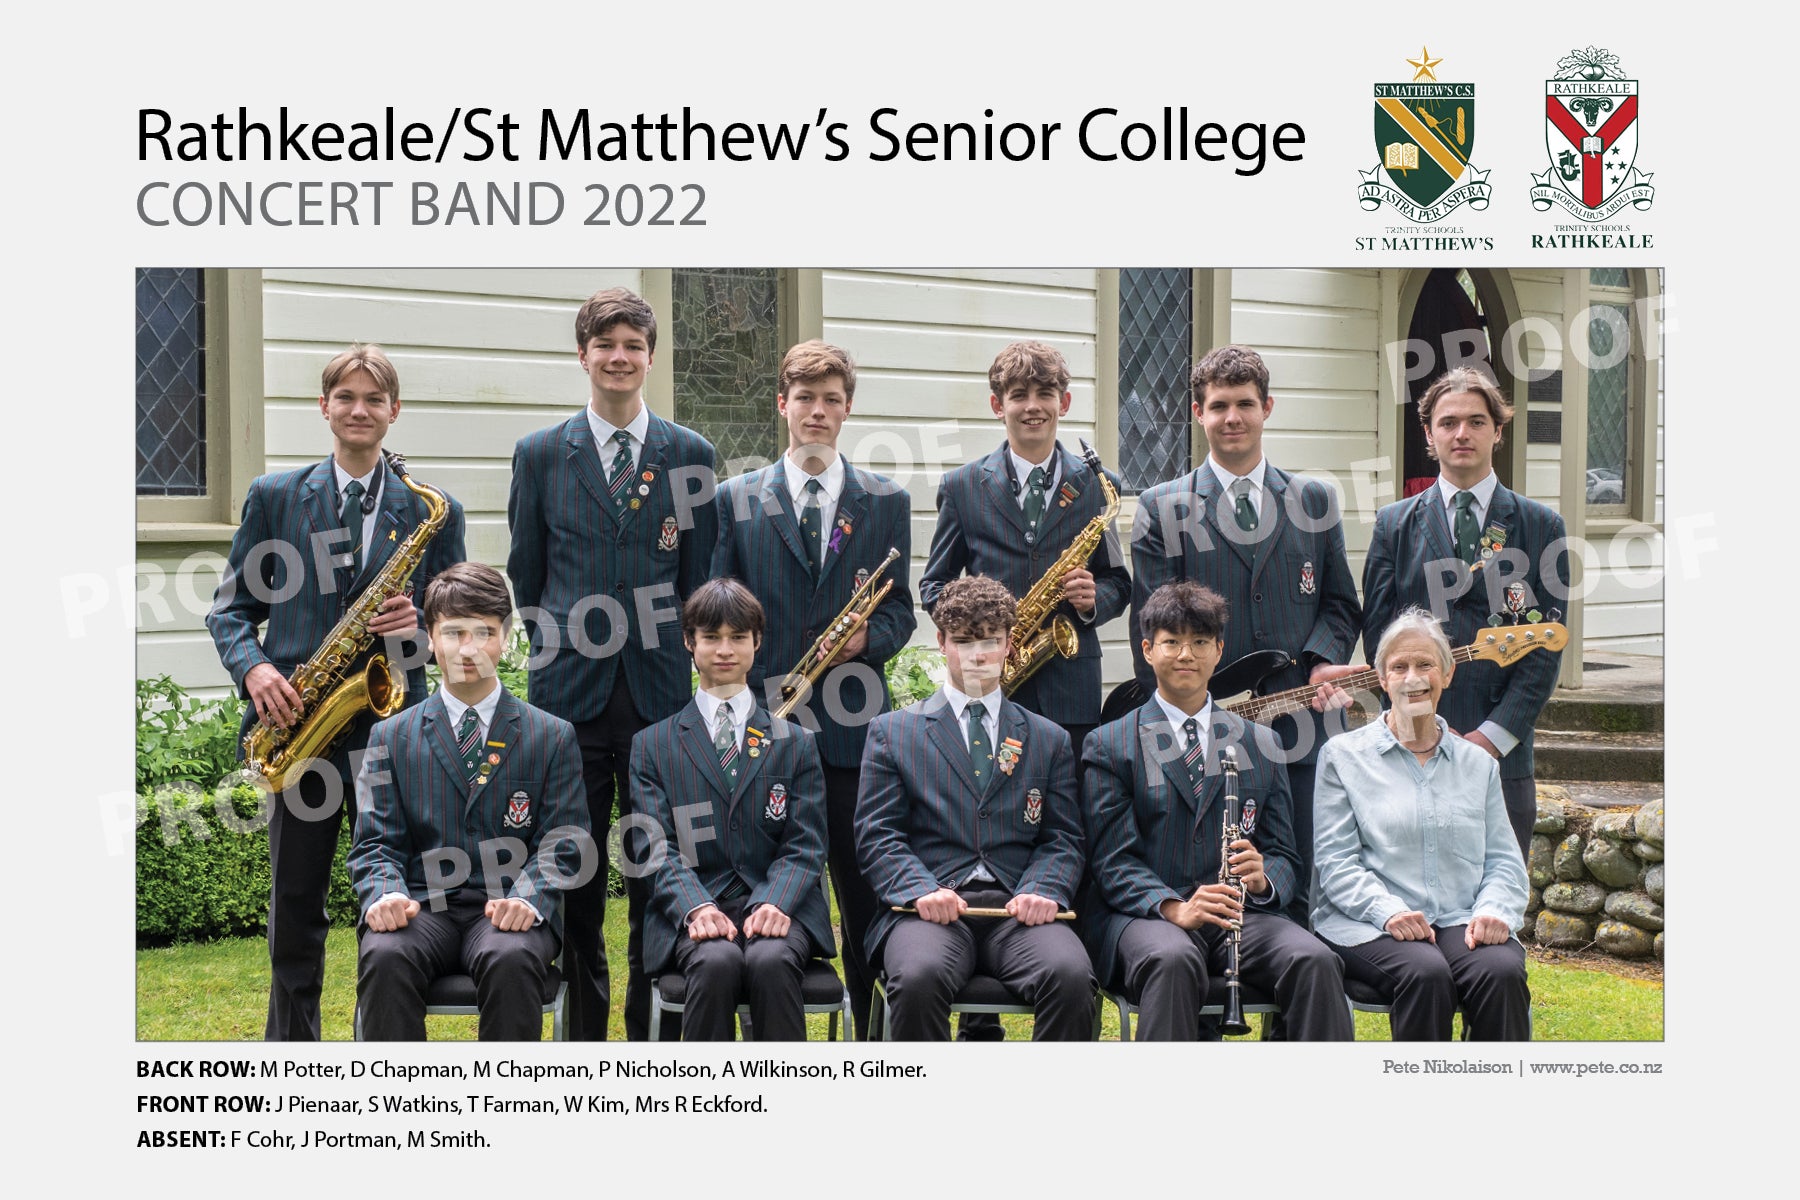 Concert Band - Rathkeale St Matthew’s Senior College 2022